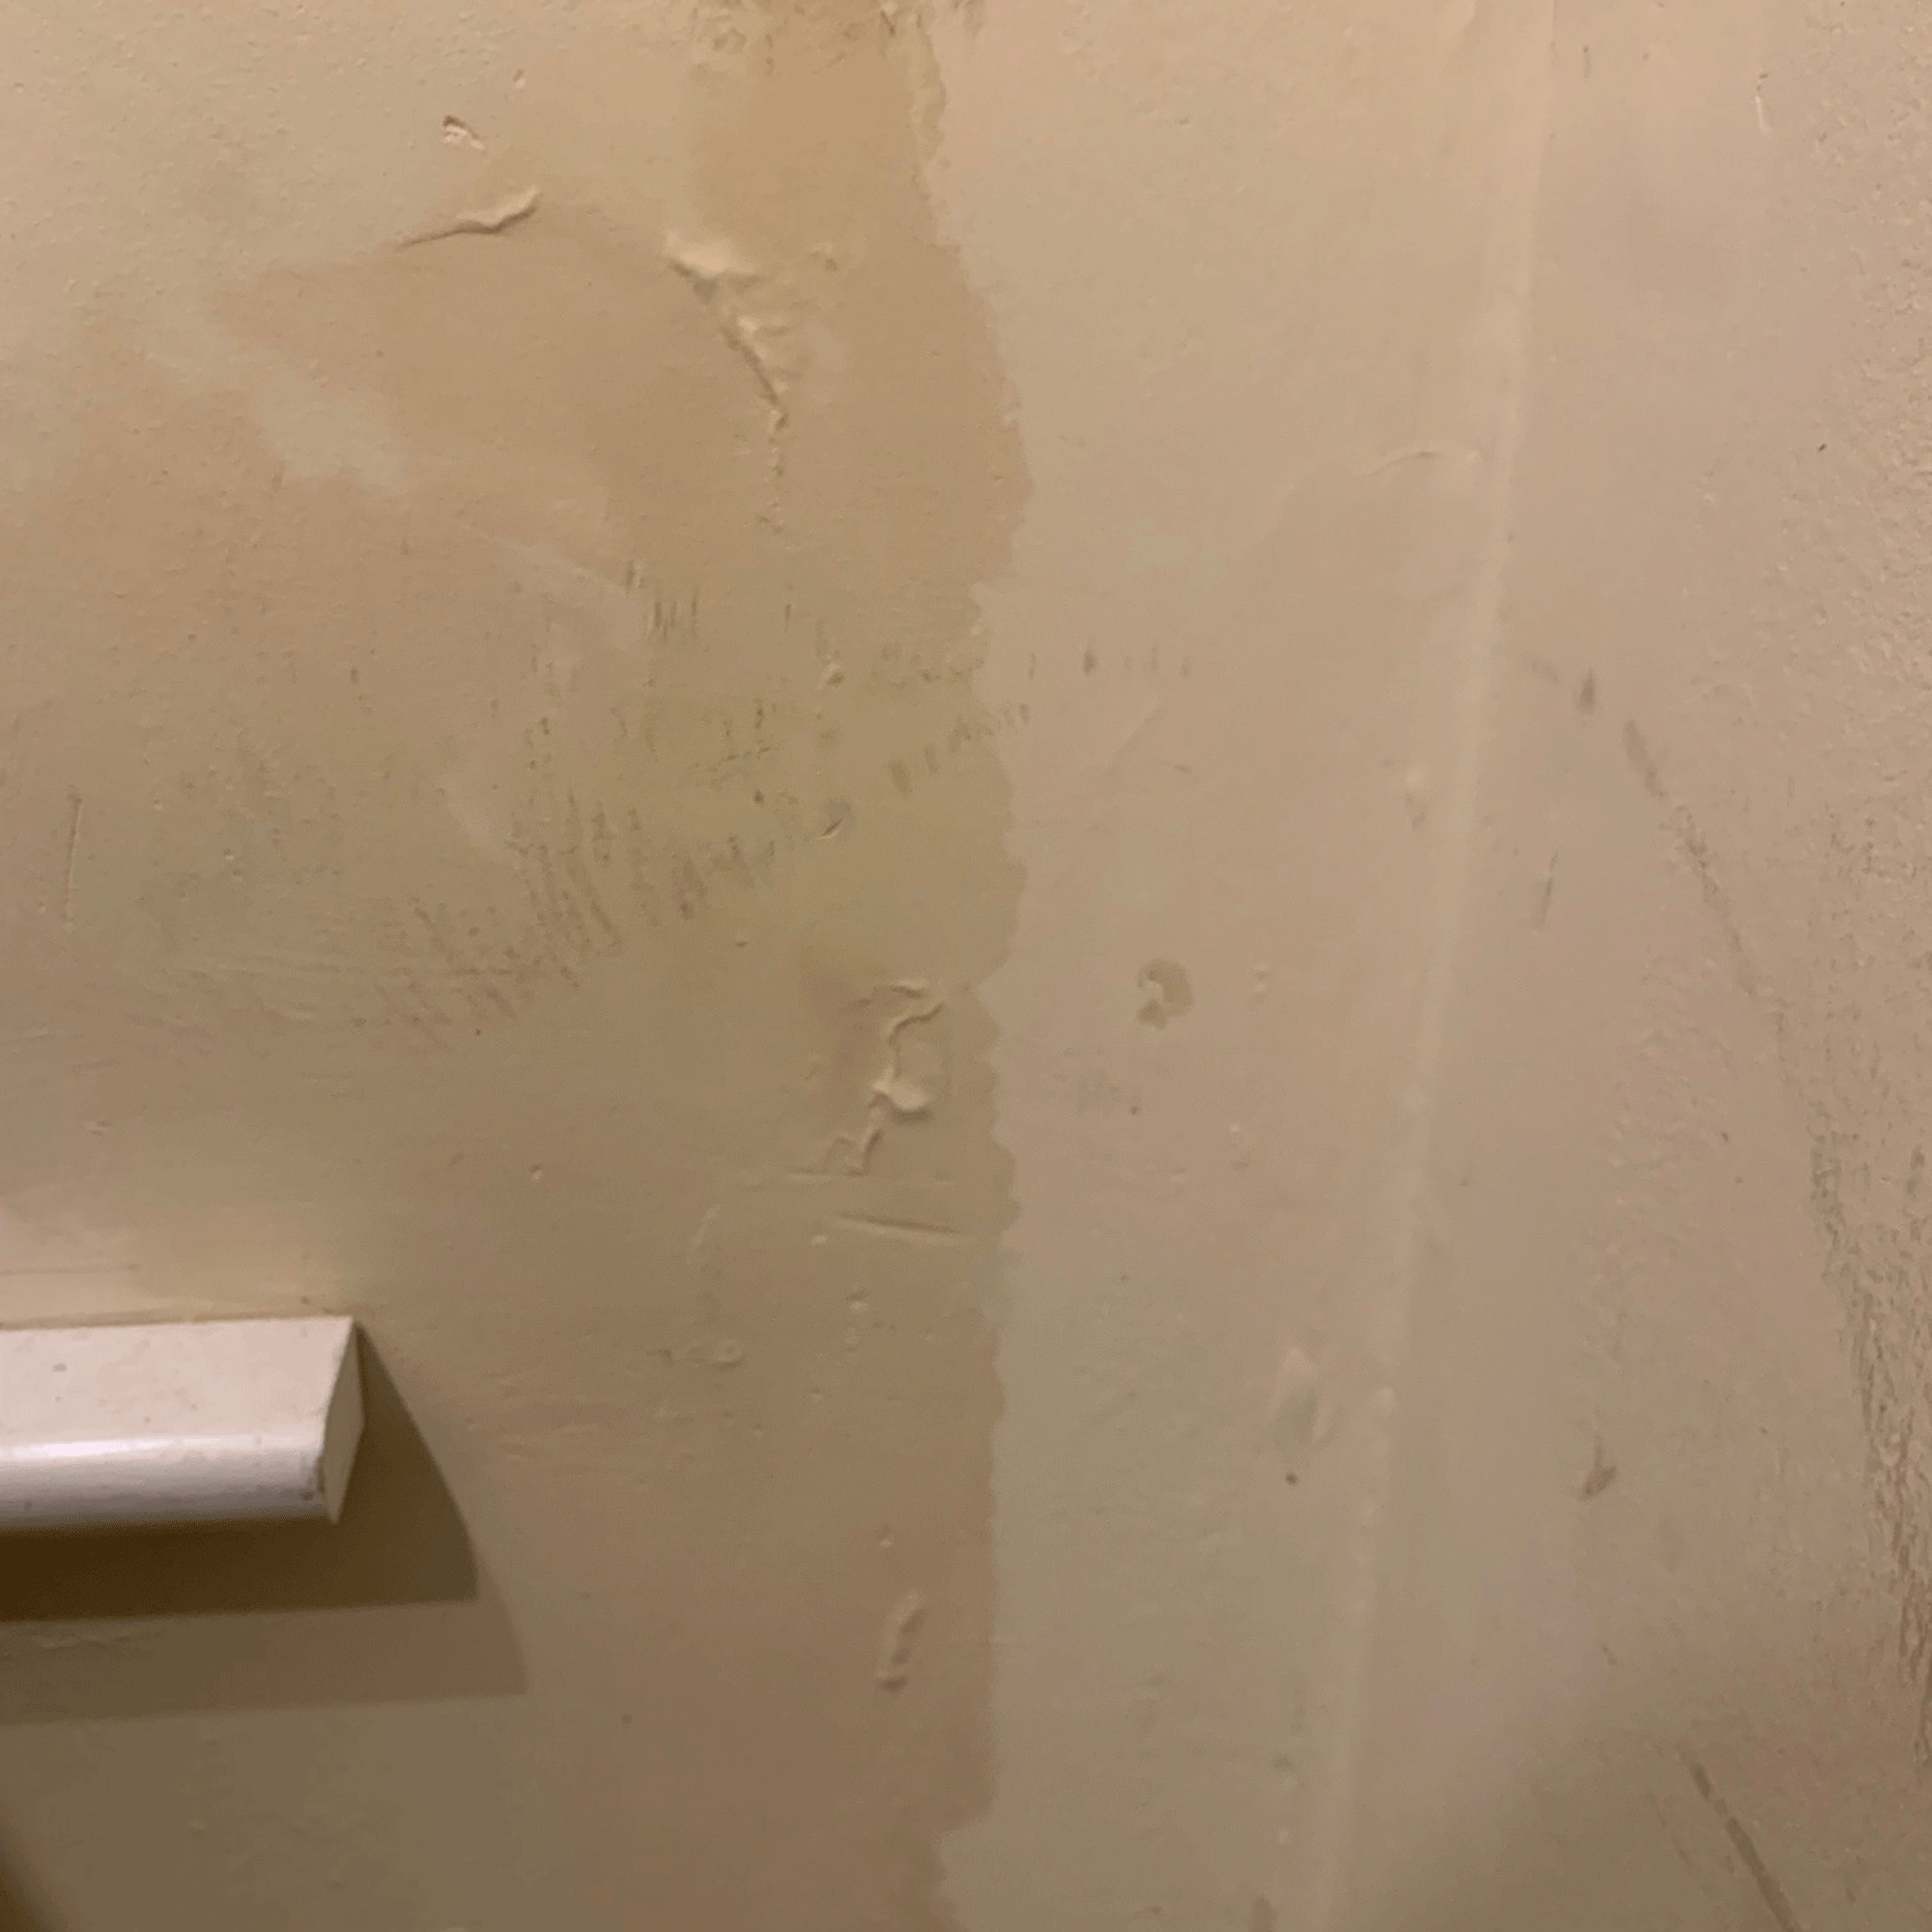 white dehumidifier next to damp wall